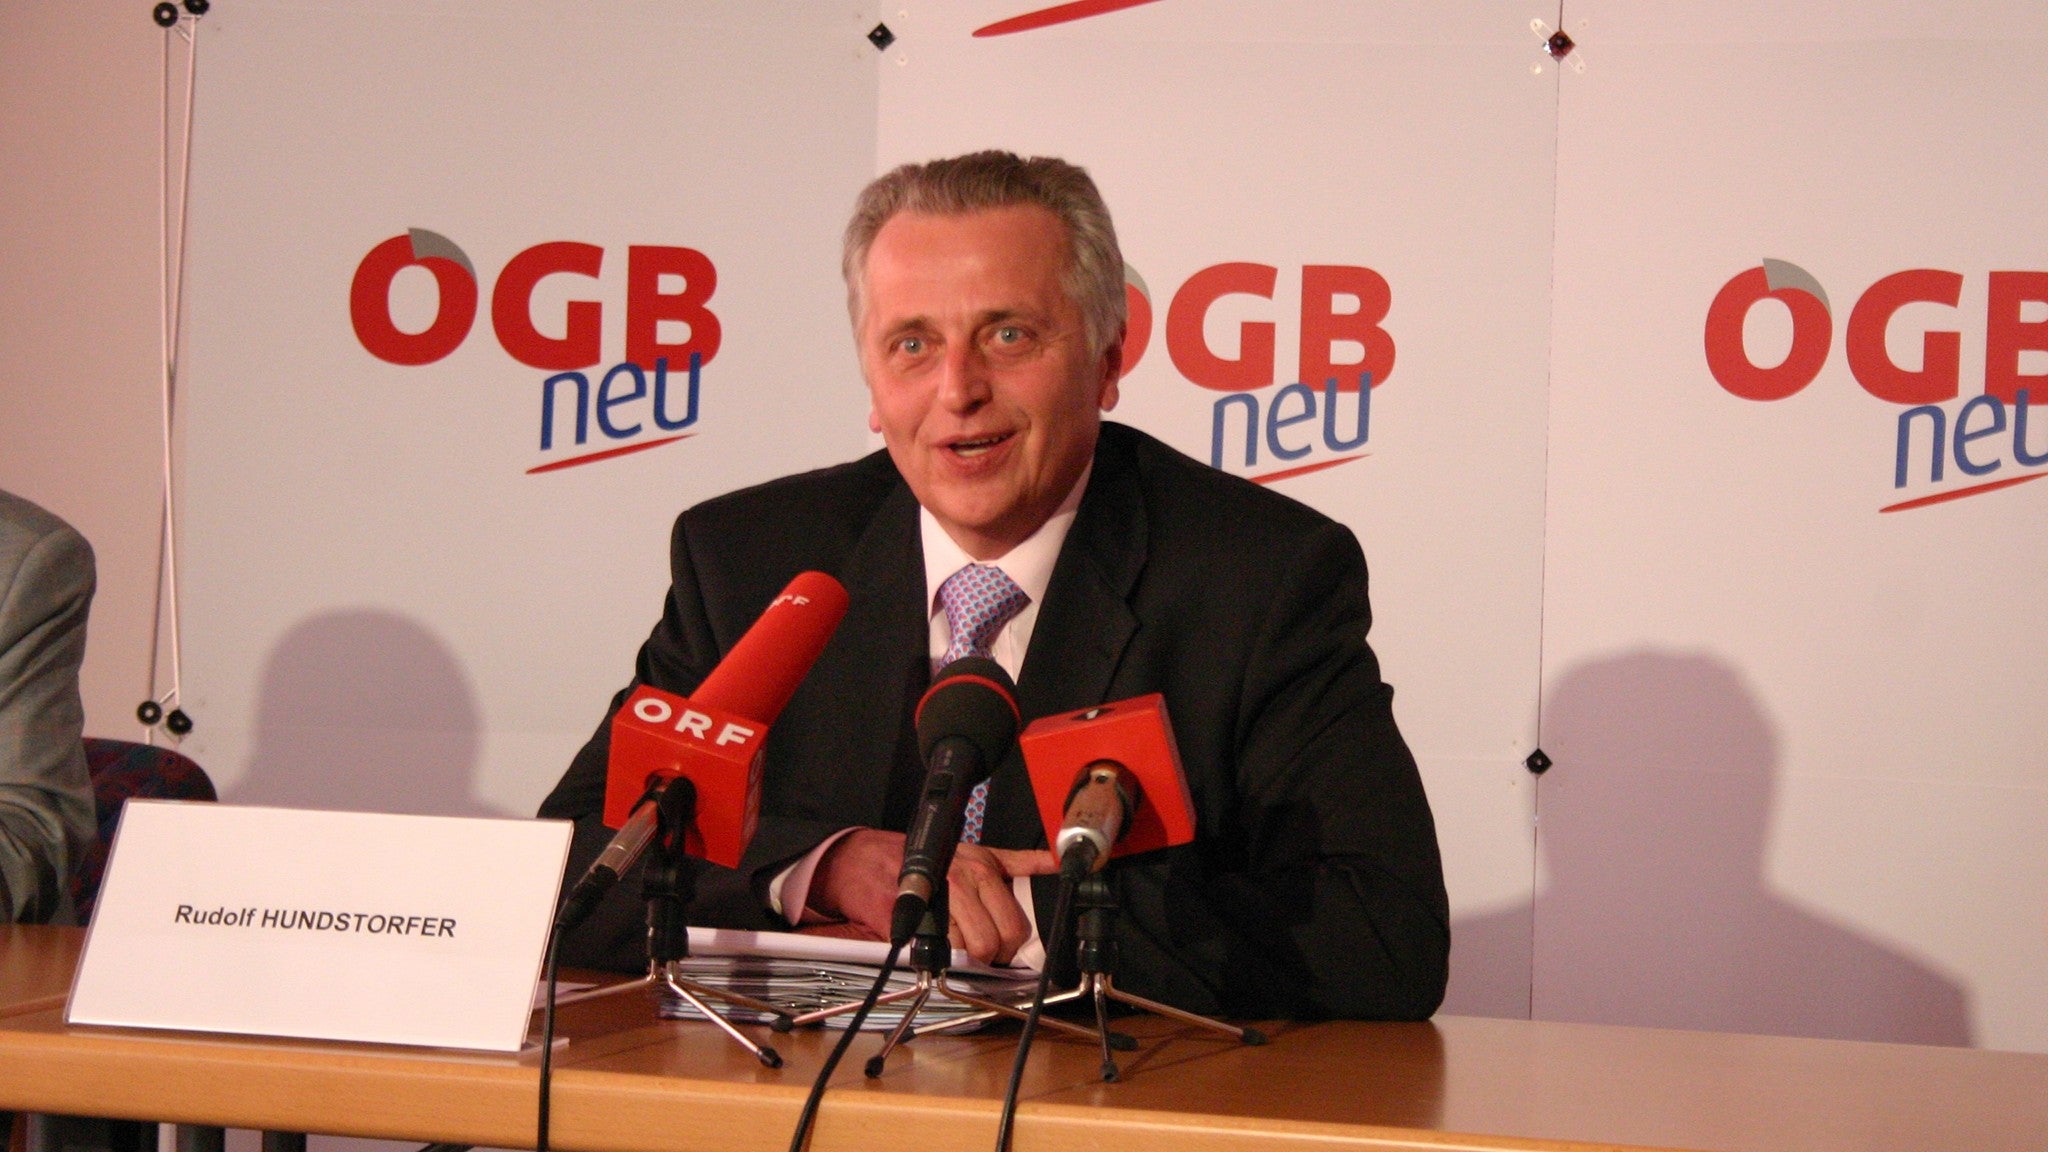 ÖGB-Präsident Rudolf Hundstorfer bei Pressekonferenz zum Thema ÖGB neu